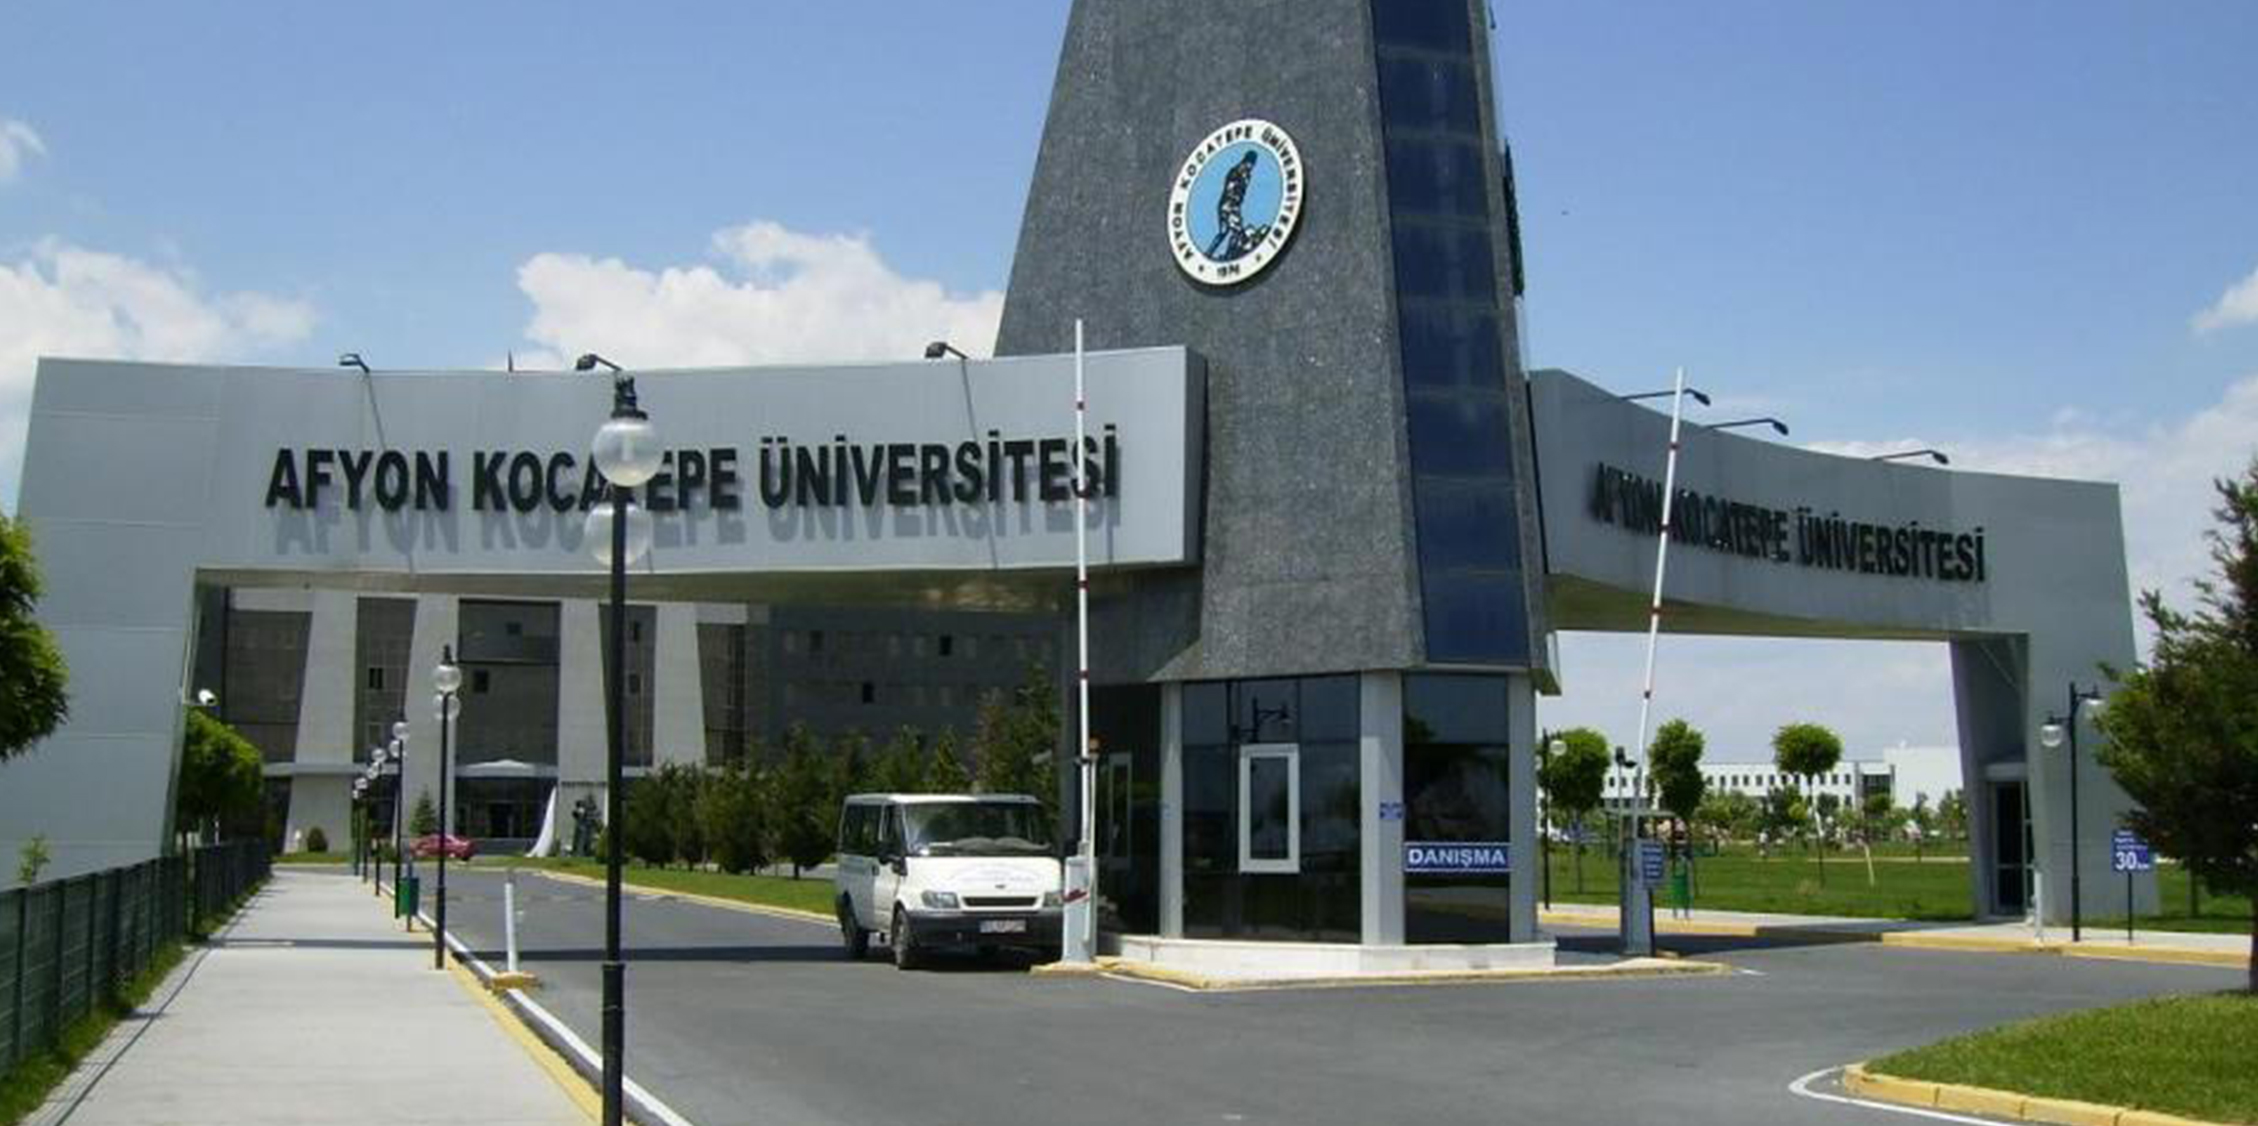 afyonkocatepe universitesi find and study 1 - دانشگاه Afyon Kocatepe